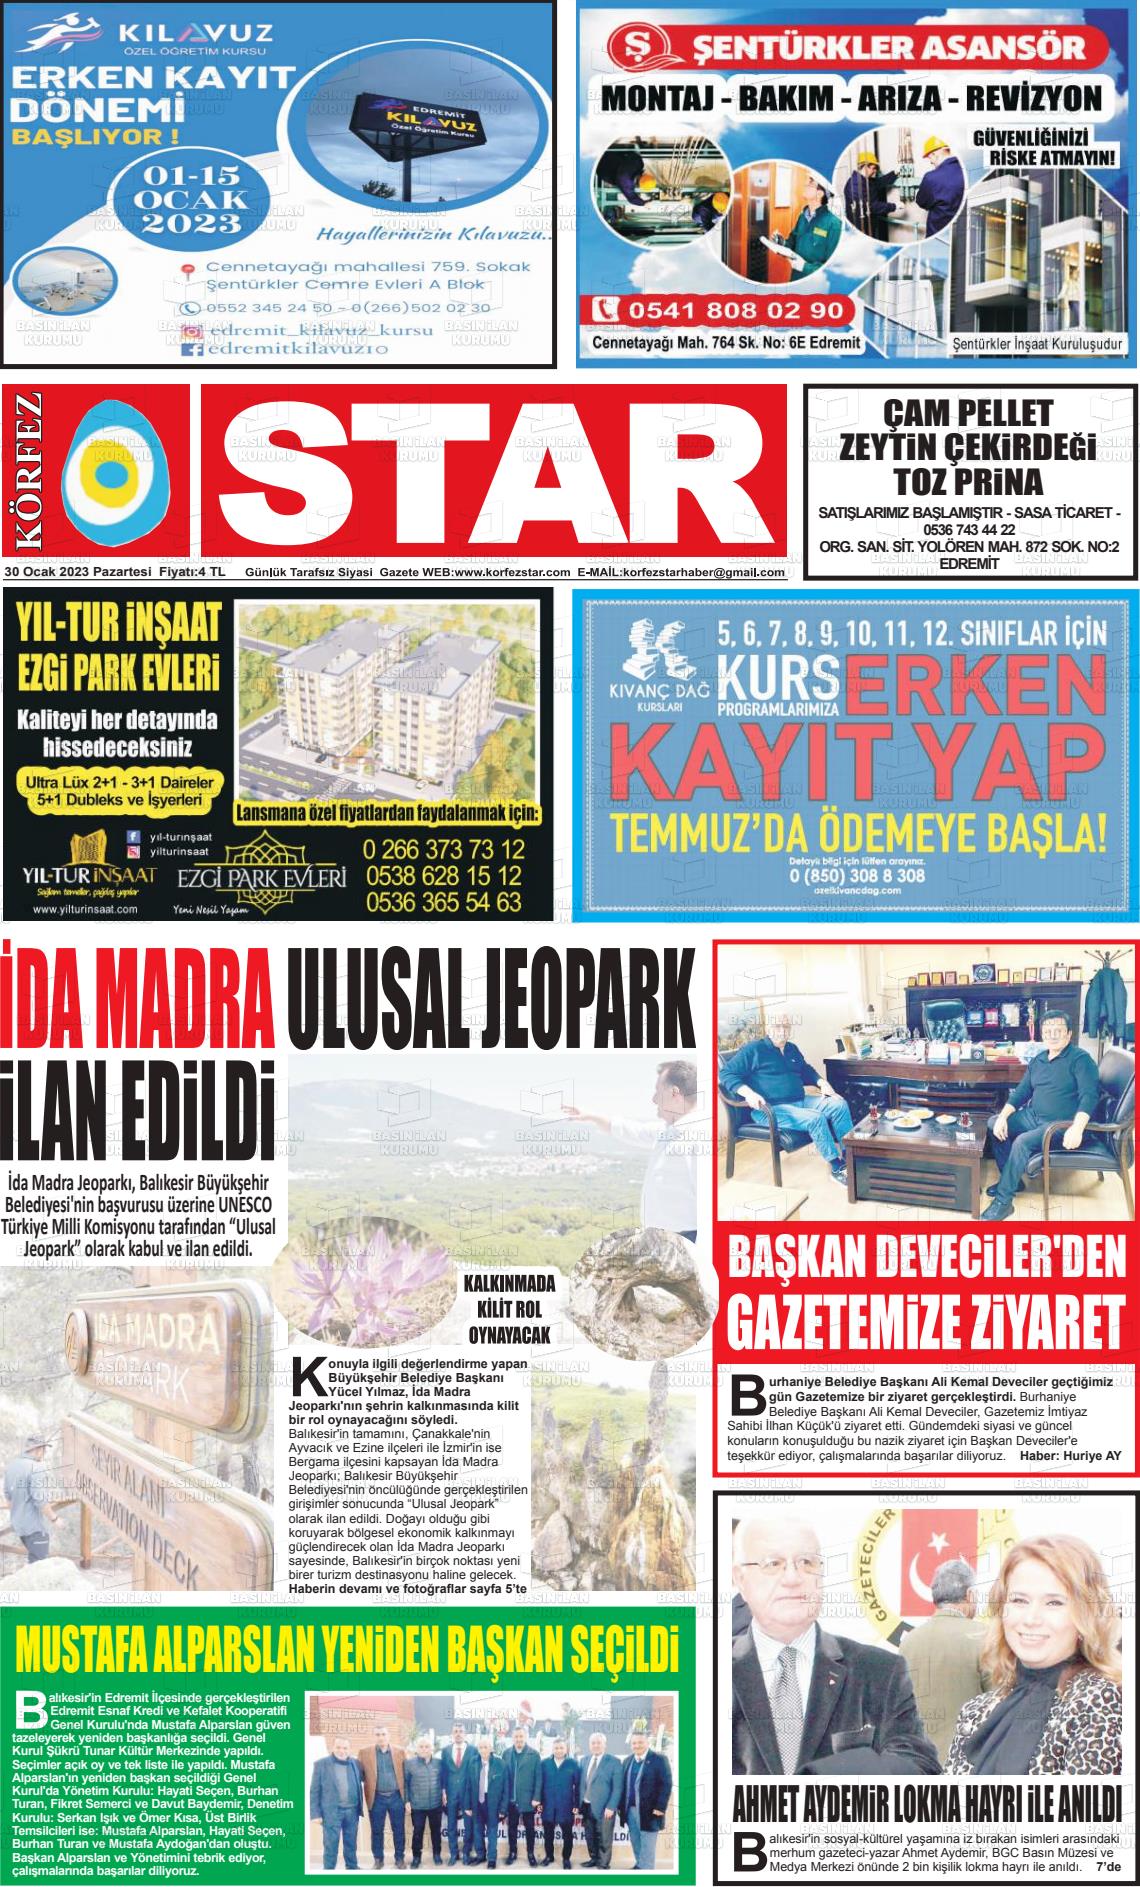 30 Ocak 2023 Körfez Star Gazete Manşeti